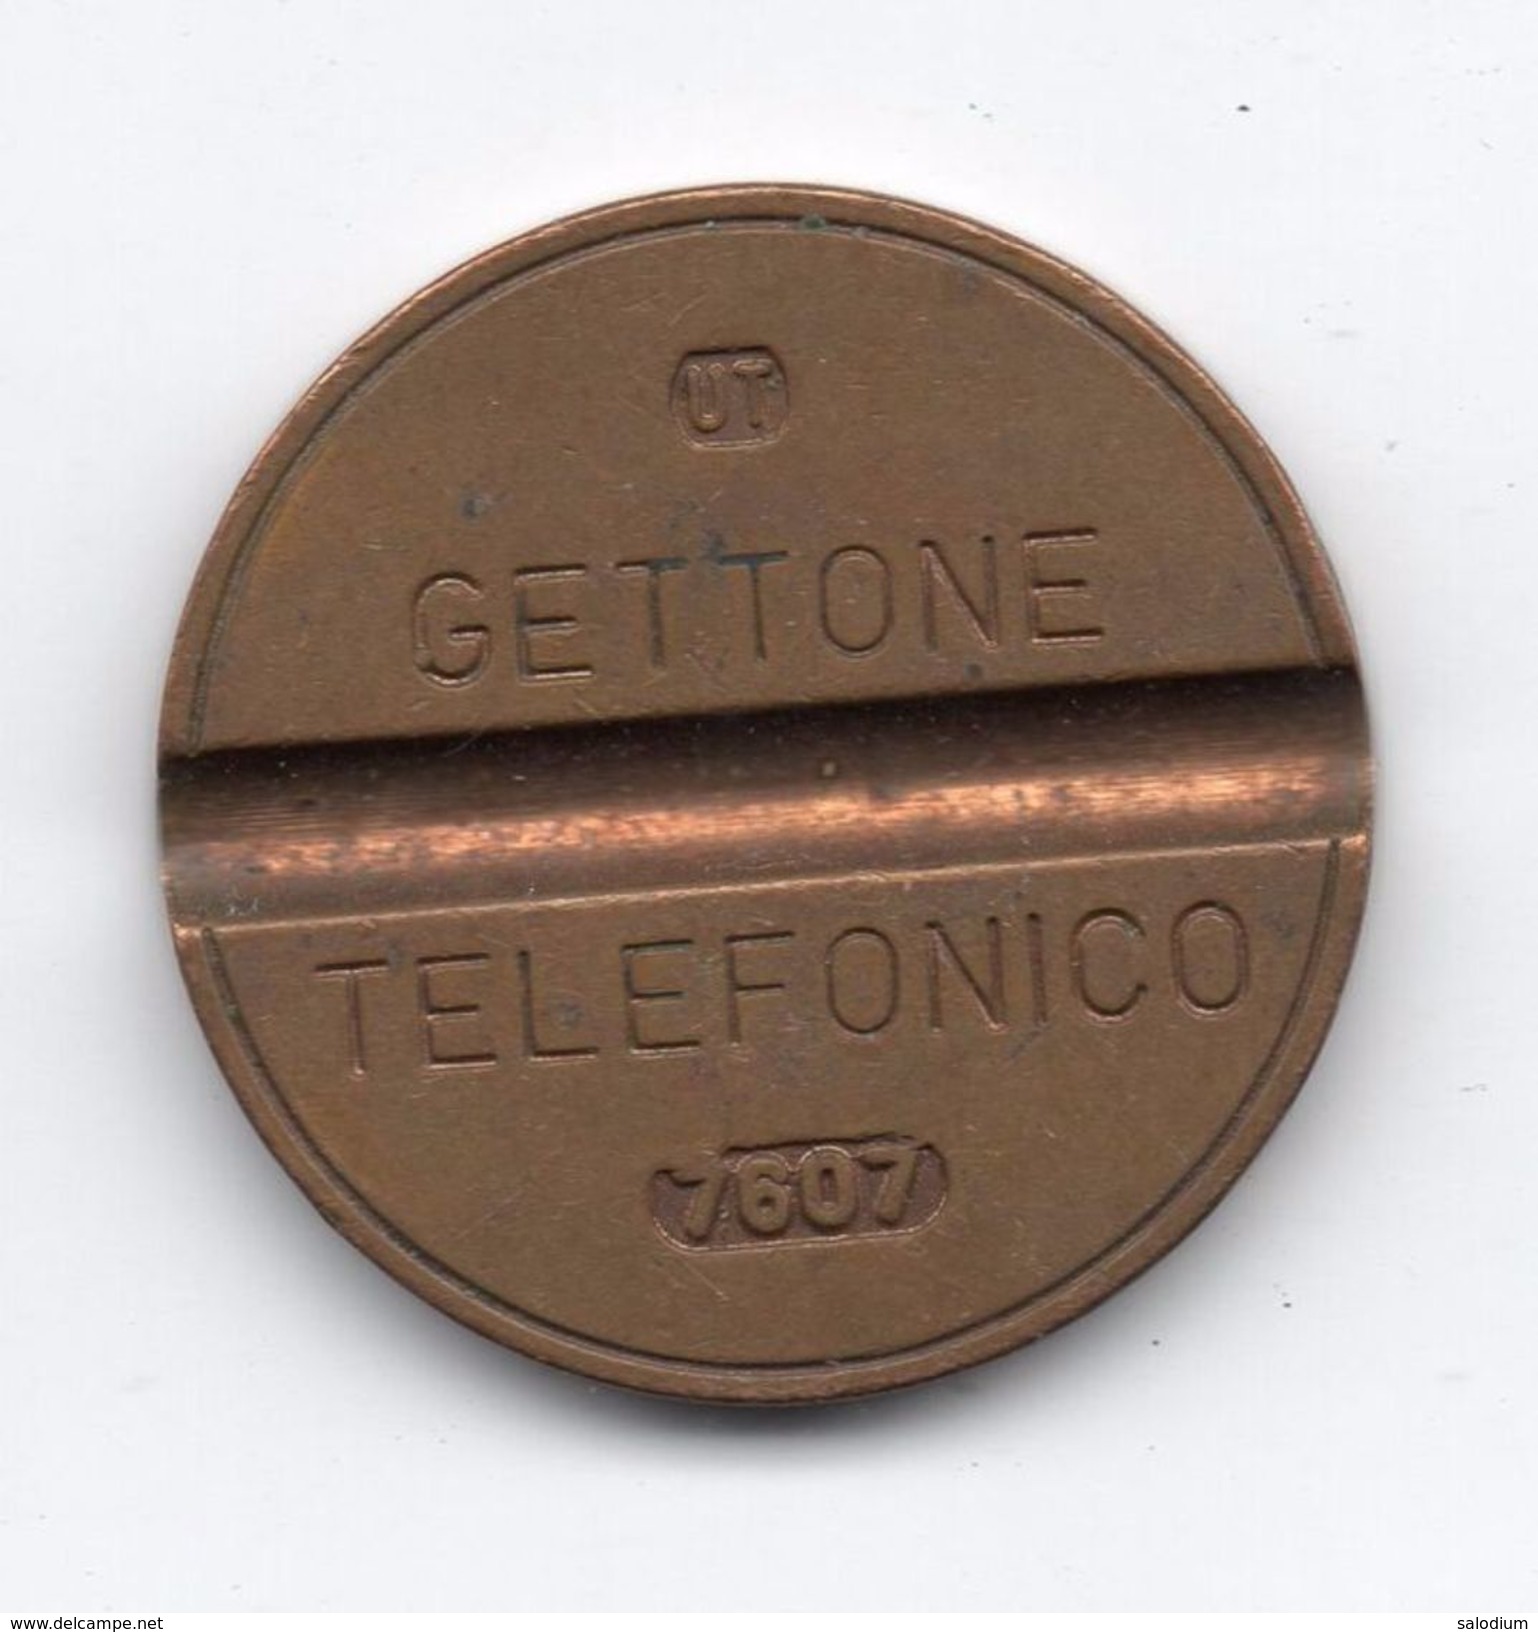 Gettone Telefonico 7607 Token Telephone - (Id-787) - Firma's